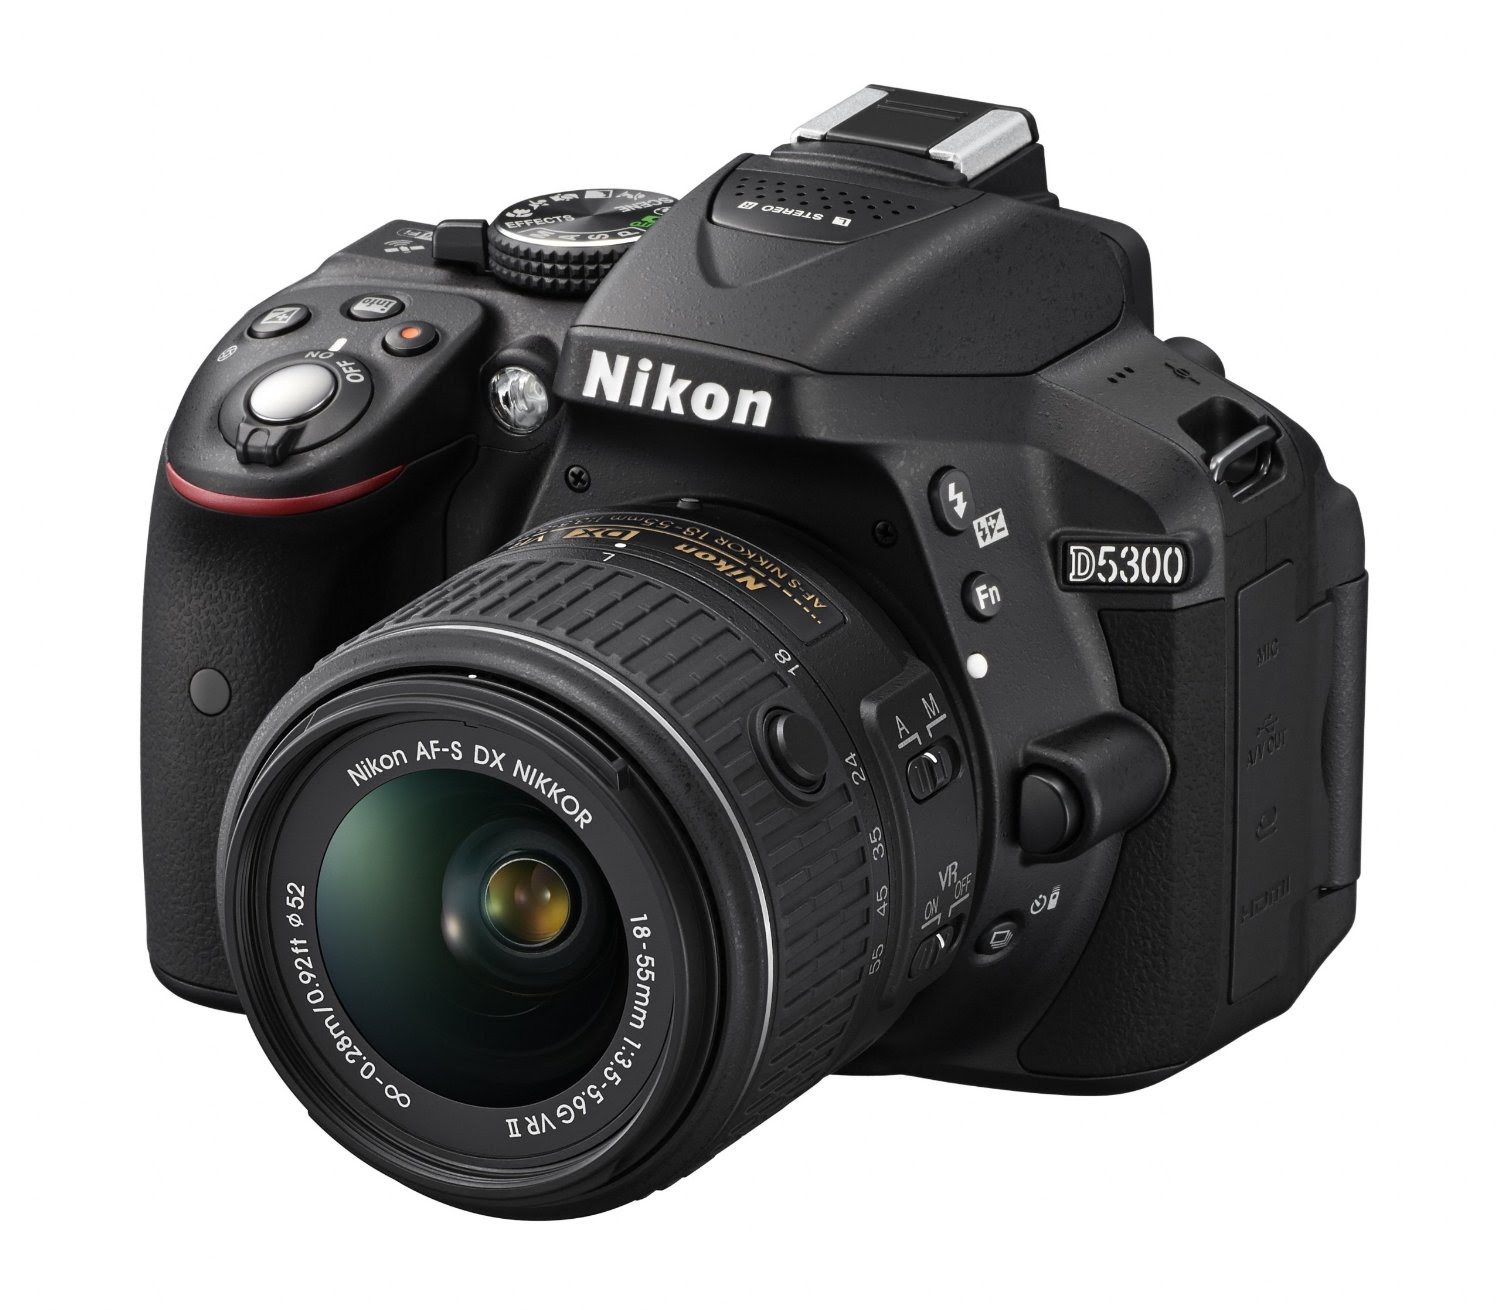 [Best Price] Nikon D5300 24.2 MP CMOS Digital SLR Camera with 18-55mm